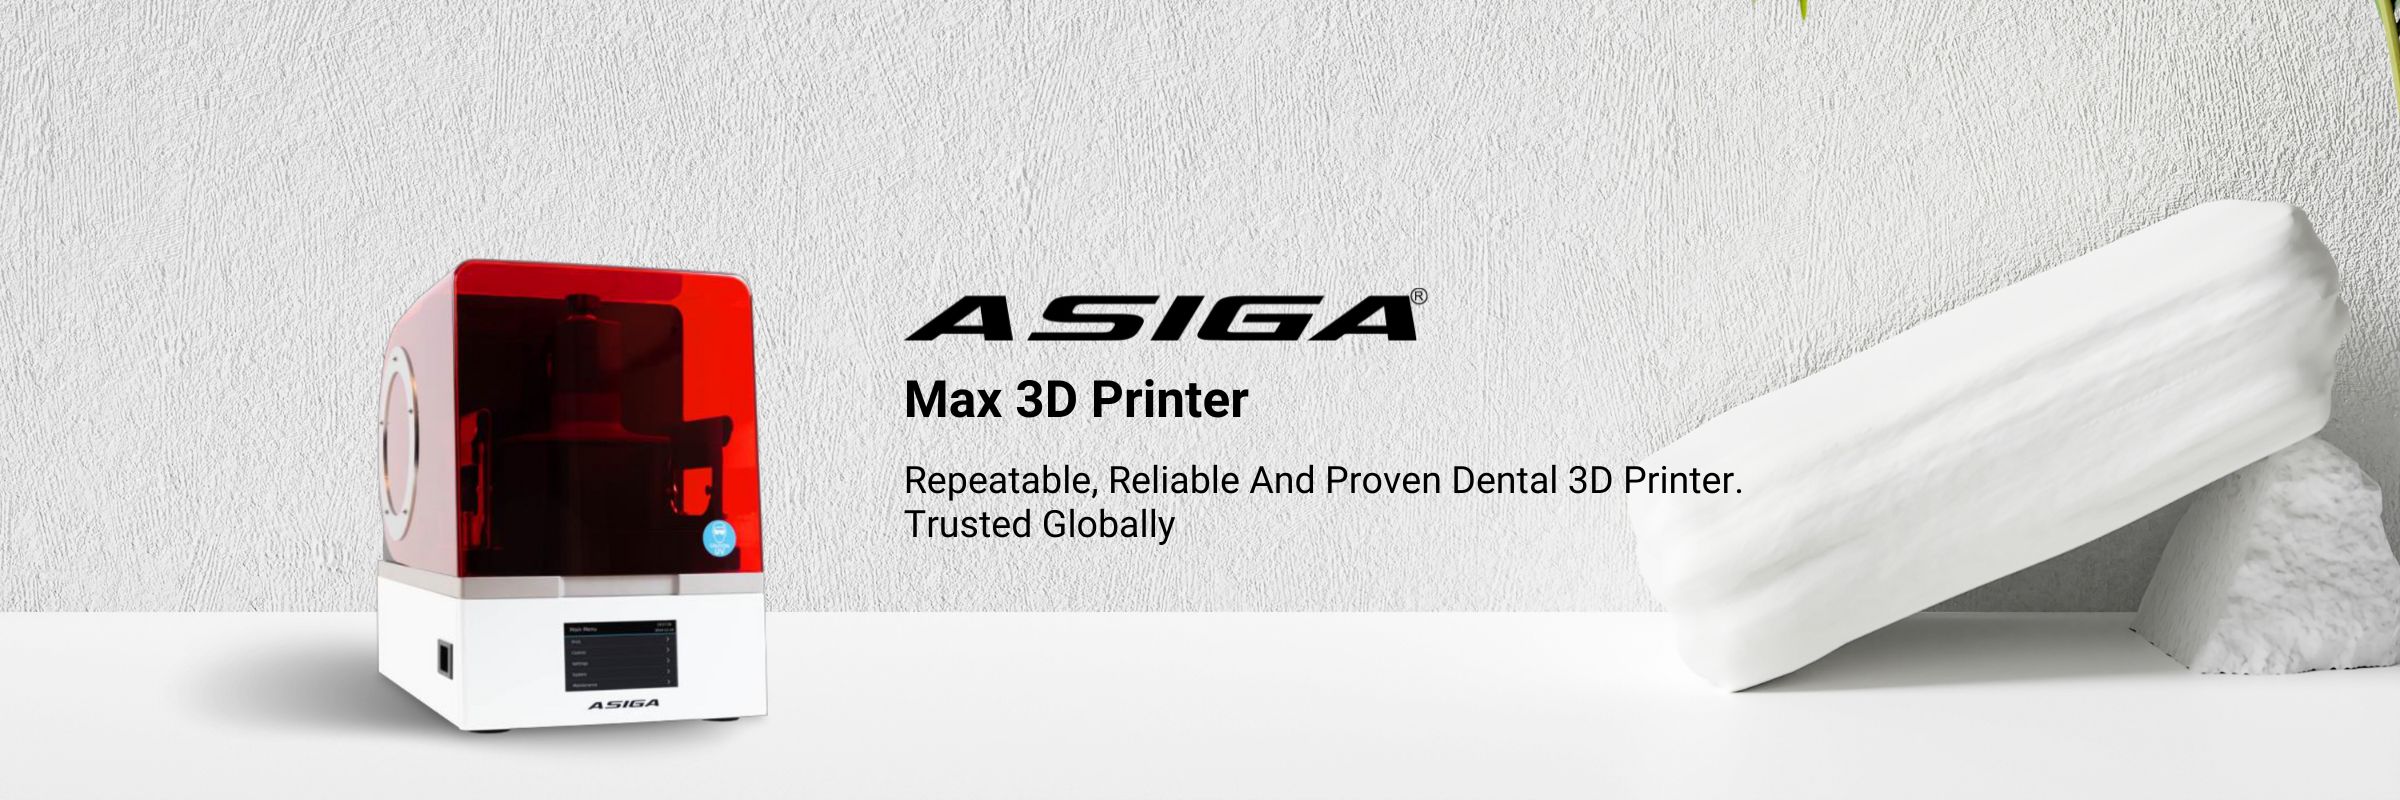 Asiga Max 3D Printer Banner Image